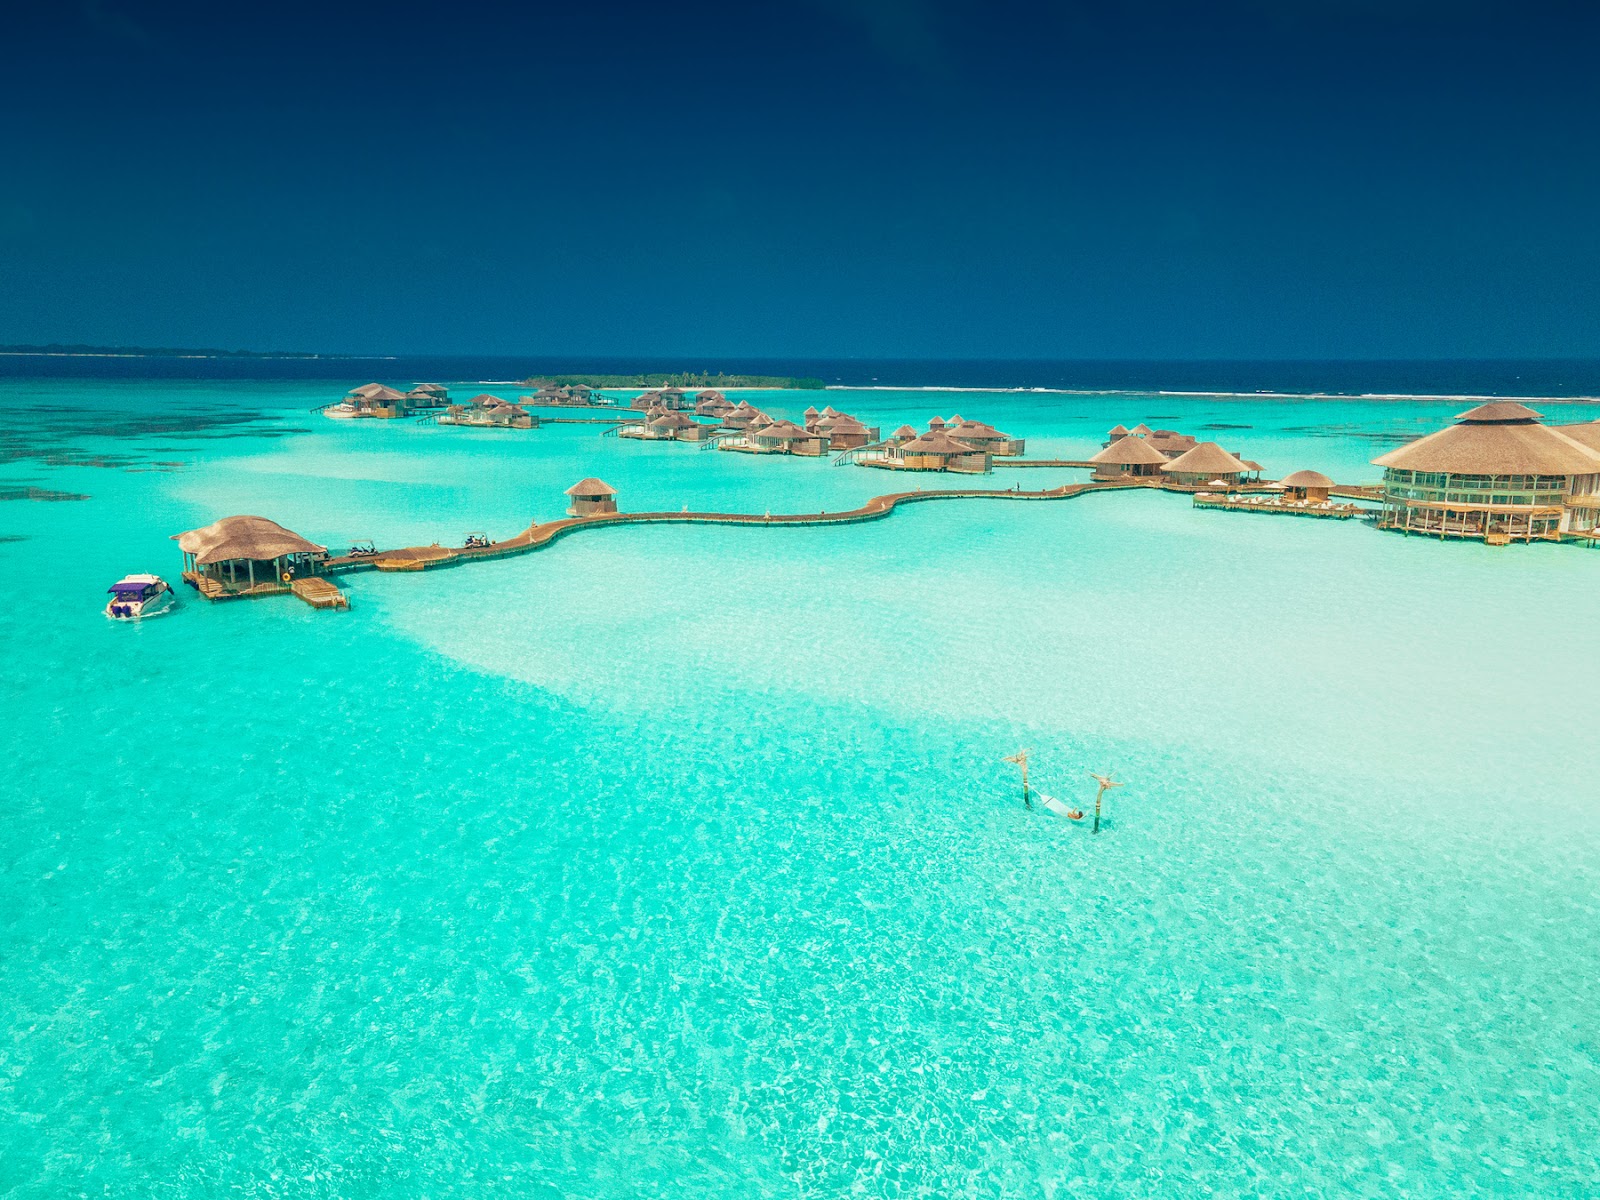 Photo of Soneva Jani island - popular place among relax connoisseurs